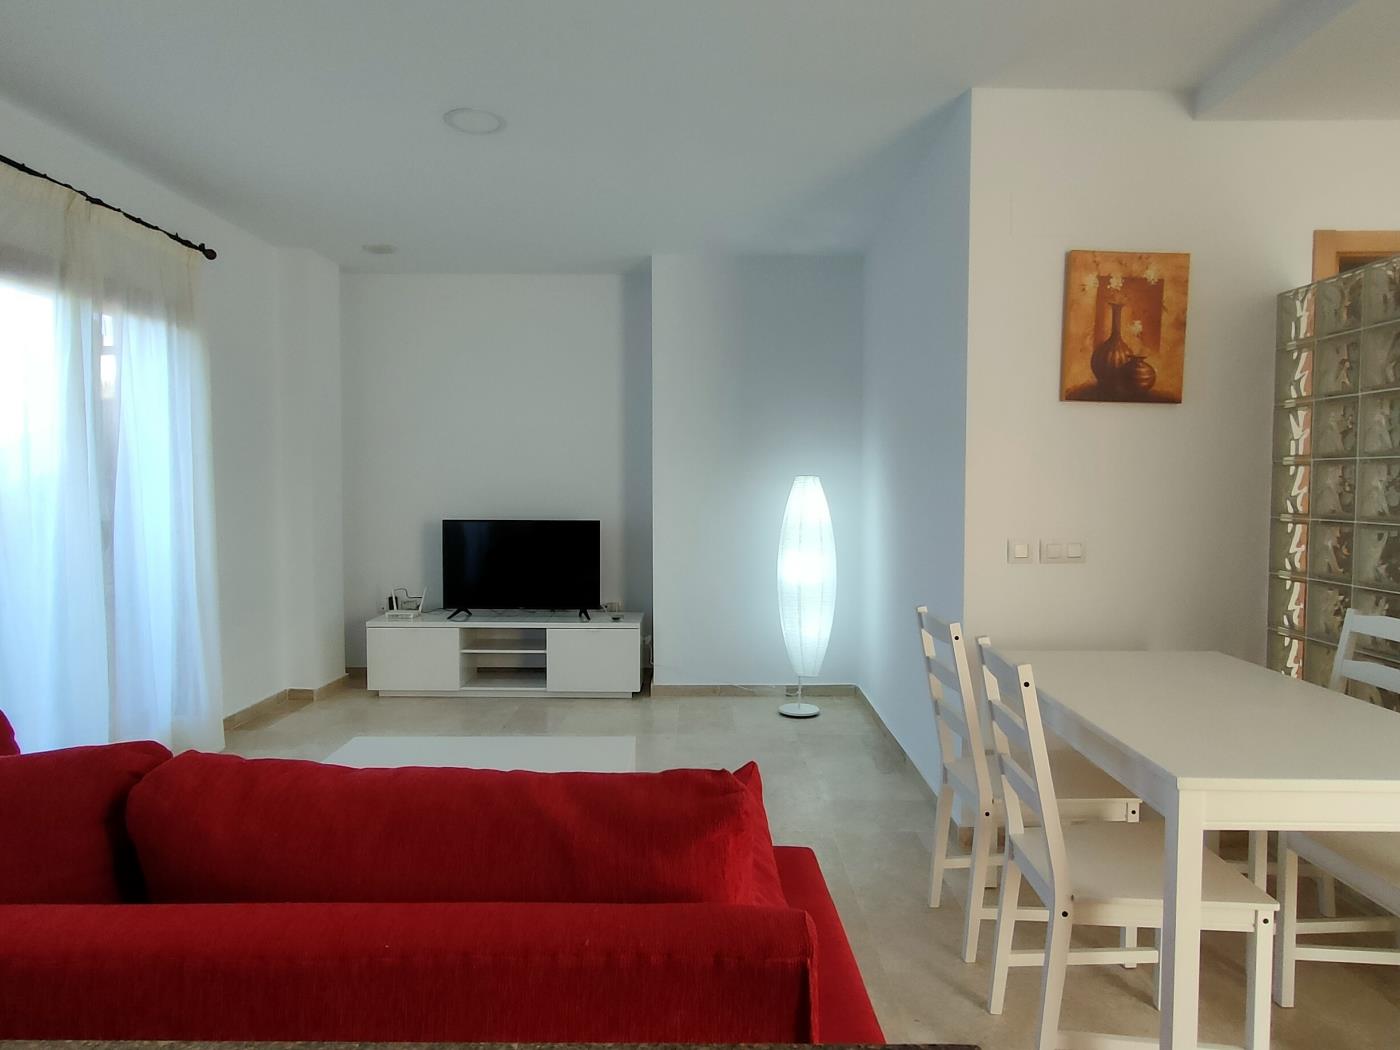 Ref. A4. Two bedroom first floor apartment in Chiclana de la frontera